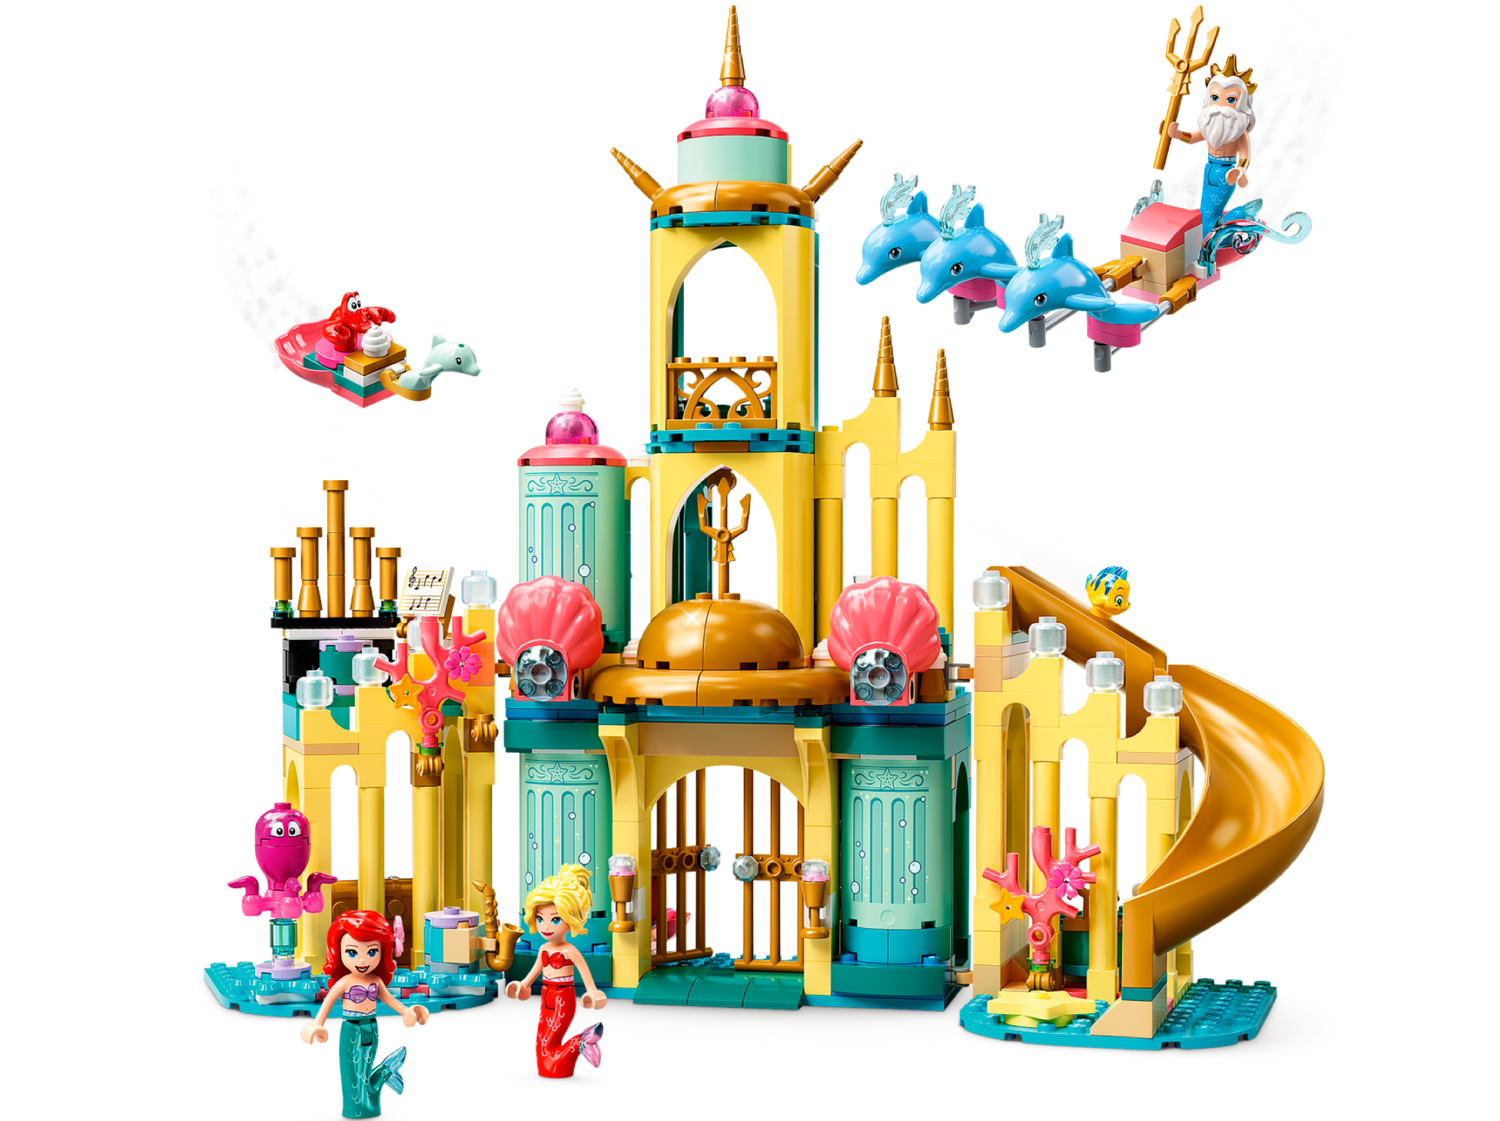 Ariel’s Underwater Palace